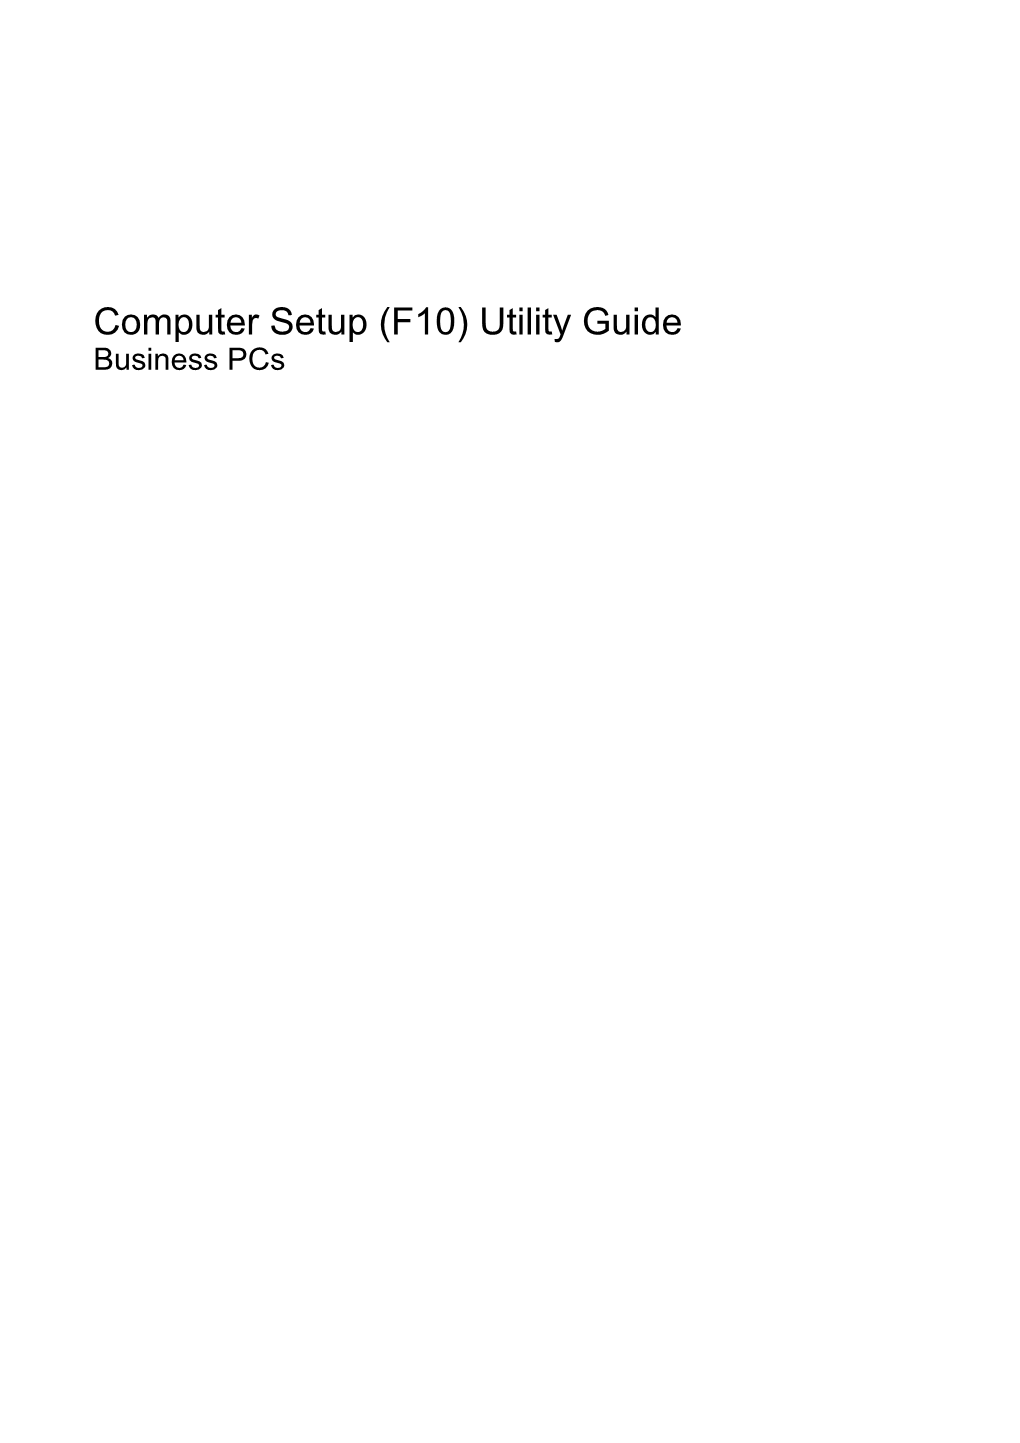 Computer Setup (F10) Utility Guide Business Pcs © Copyright 2007 Hewlett-Packard Development Company, L.P